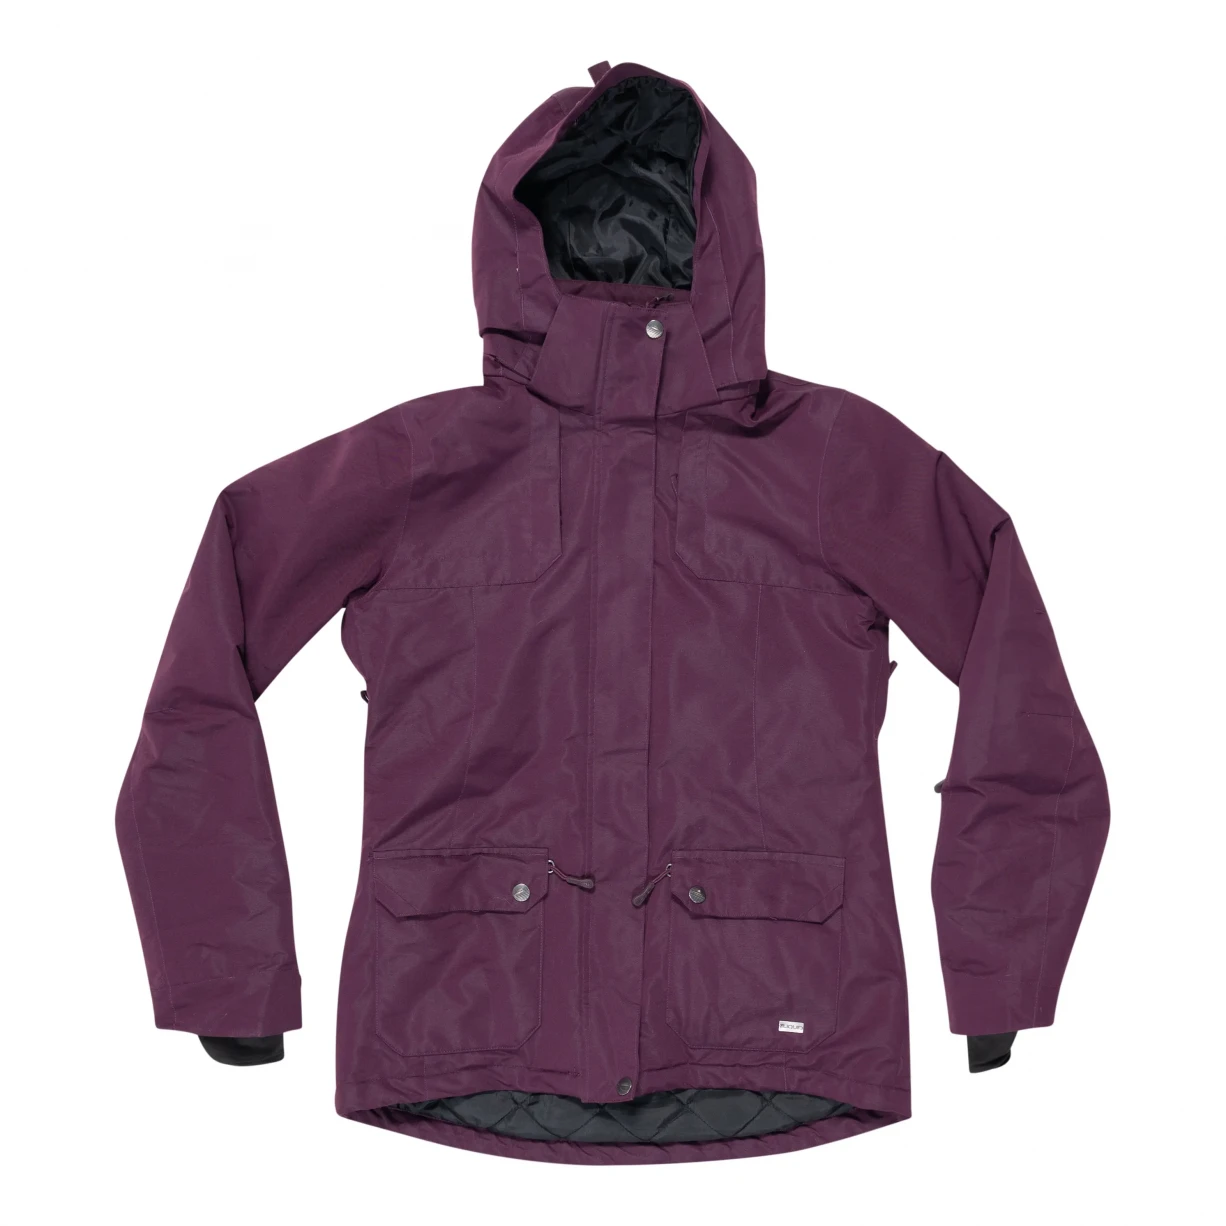 Item 961335 - Liquid Insulated Ski Jacket - Women's Ski Jacket